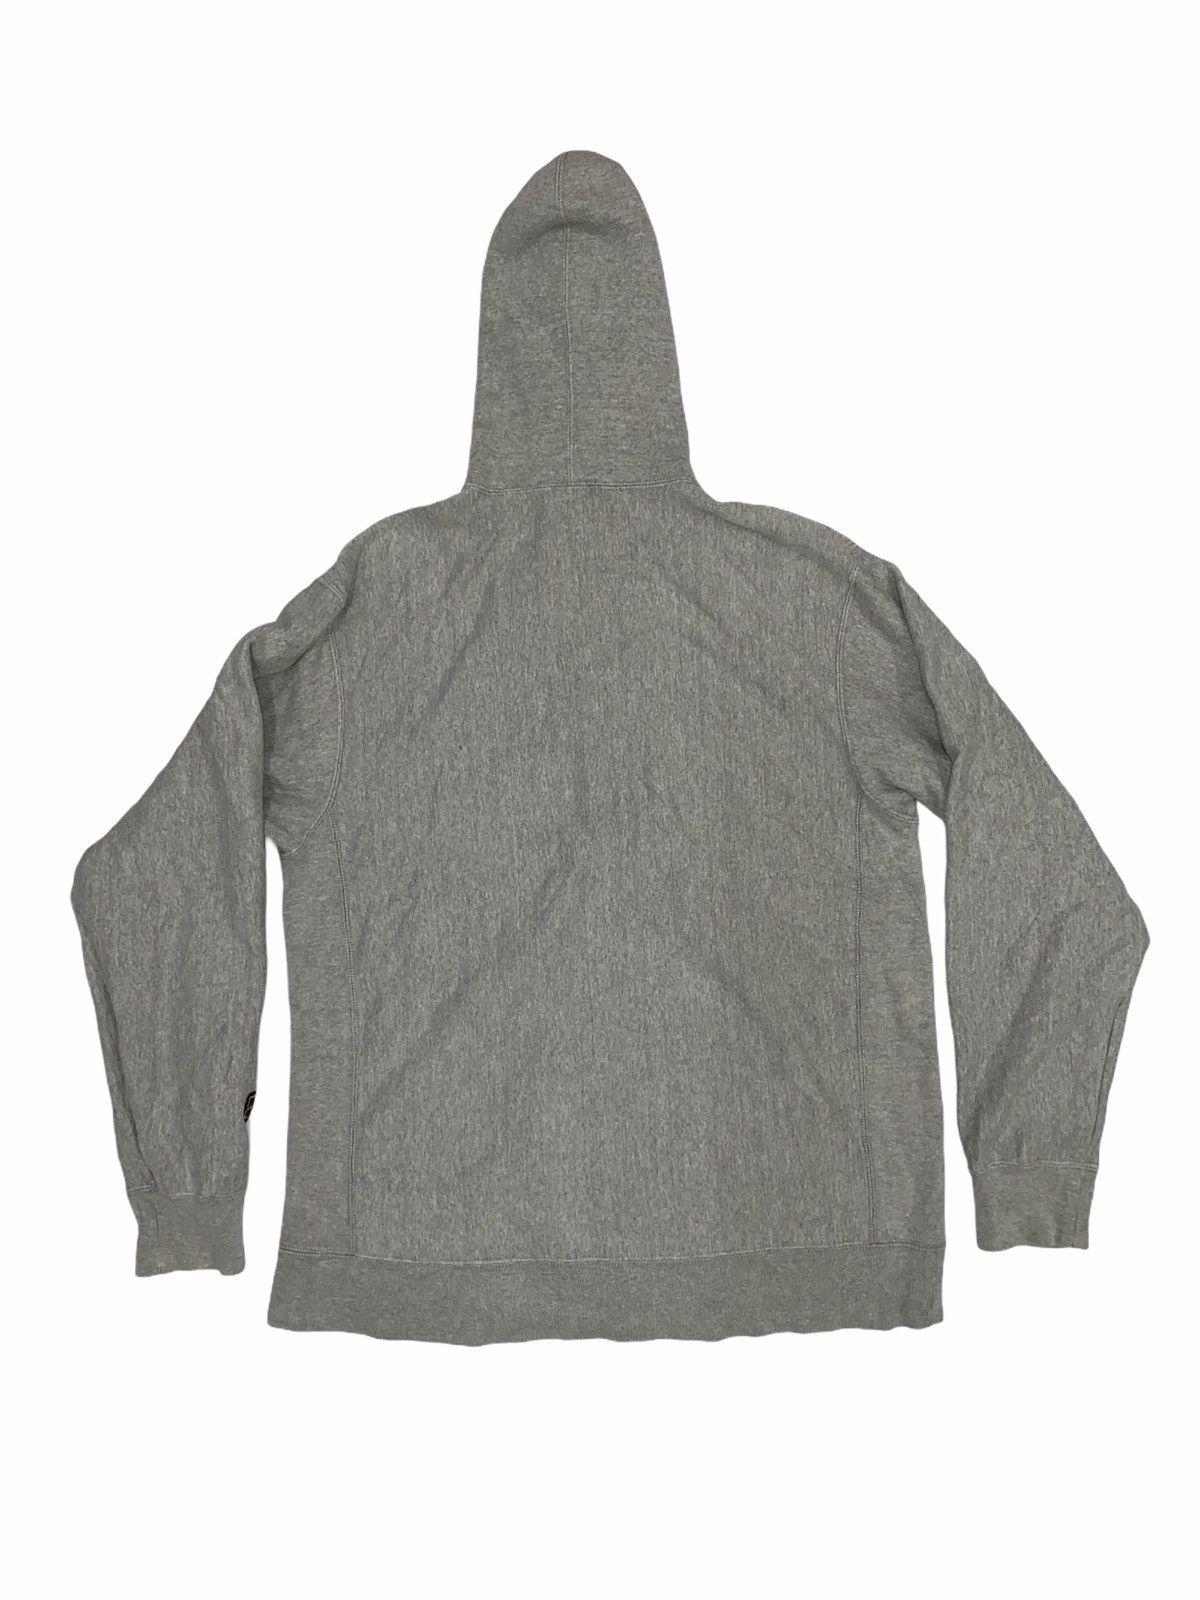 MasterPiece Master Piece Full zipper hoodie heavy sweatshirt Size US L / EU 52-54 / 3 - 2 Preview